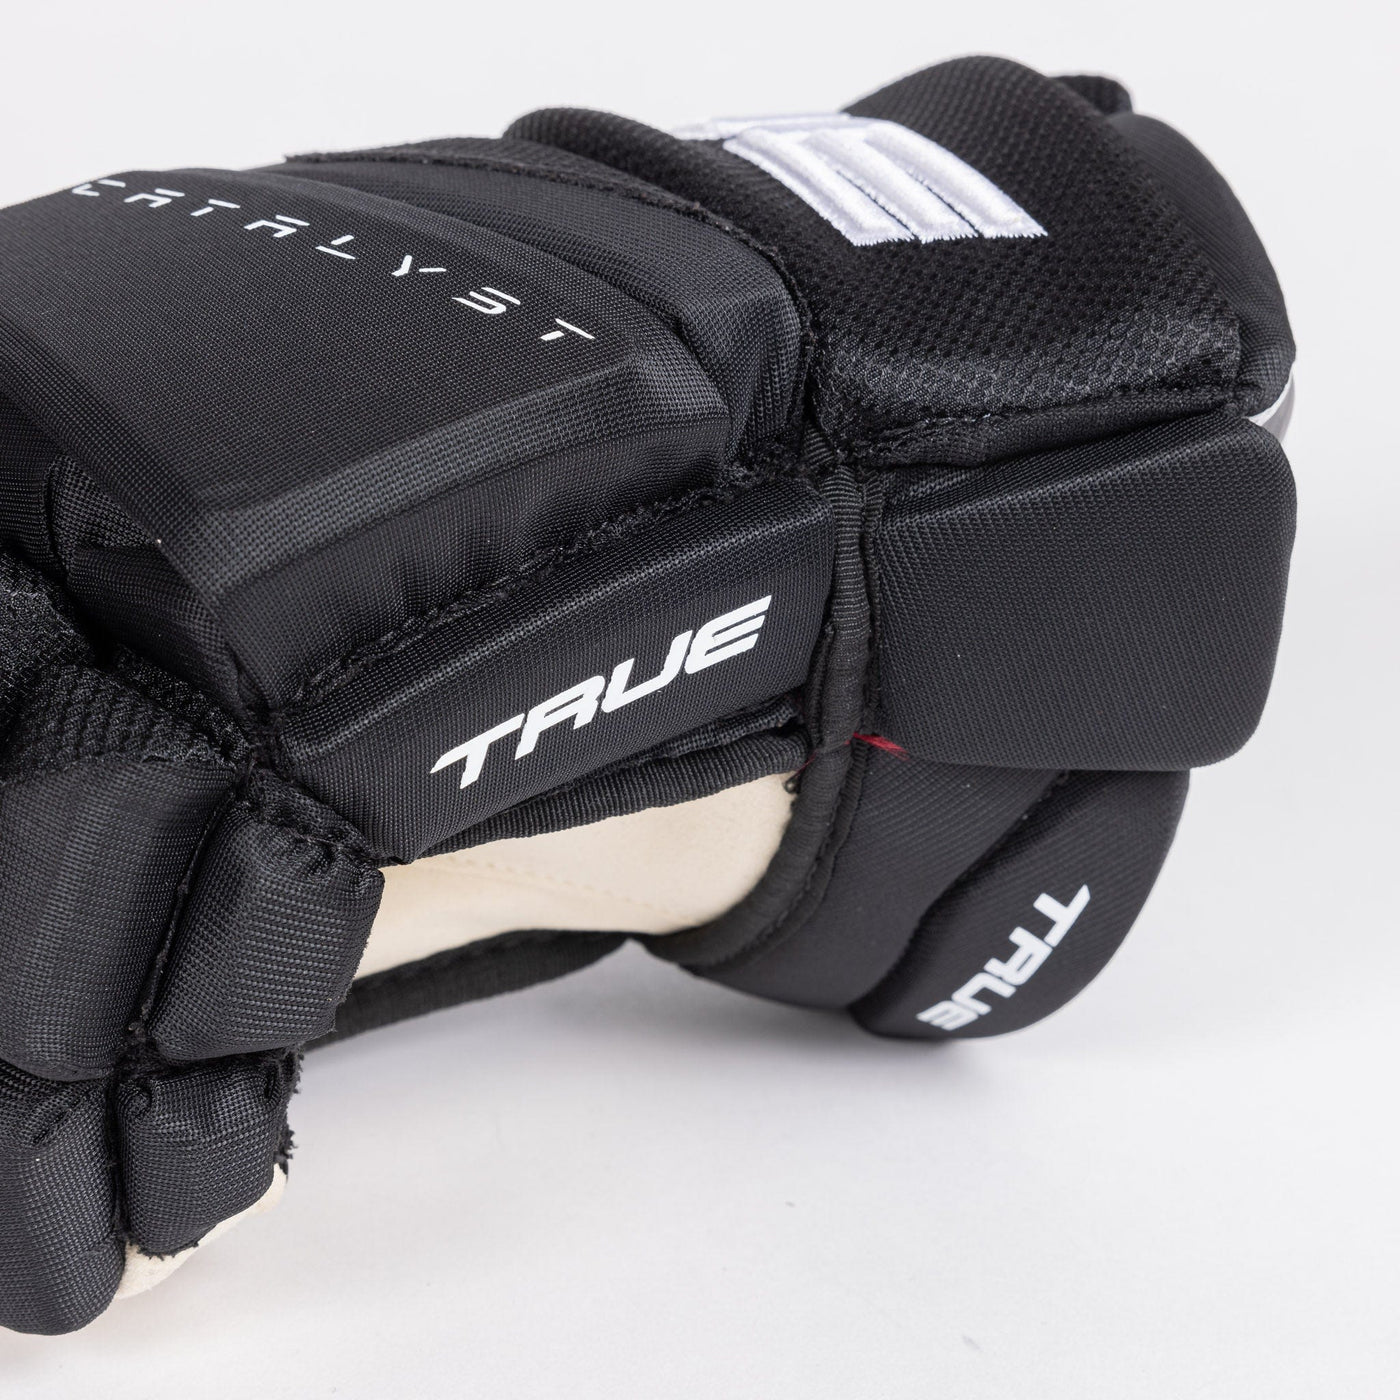 TRUE Catalyst Pro Stock Senior Hockey Glove - Dallas - The Hockey Shop Source For Sports